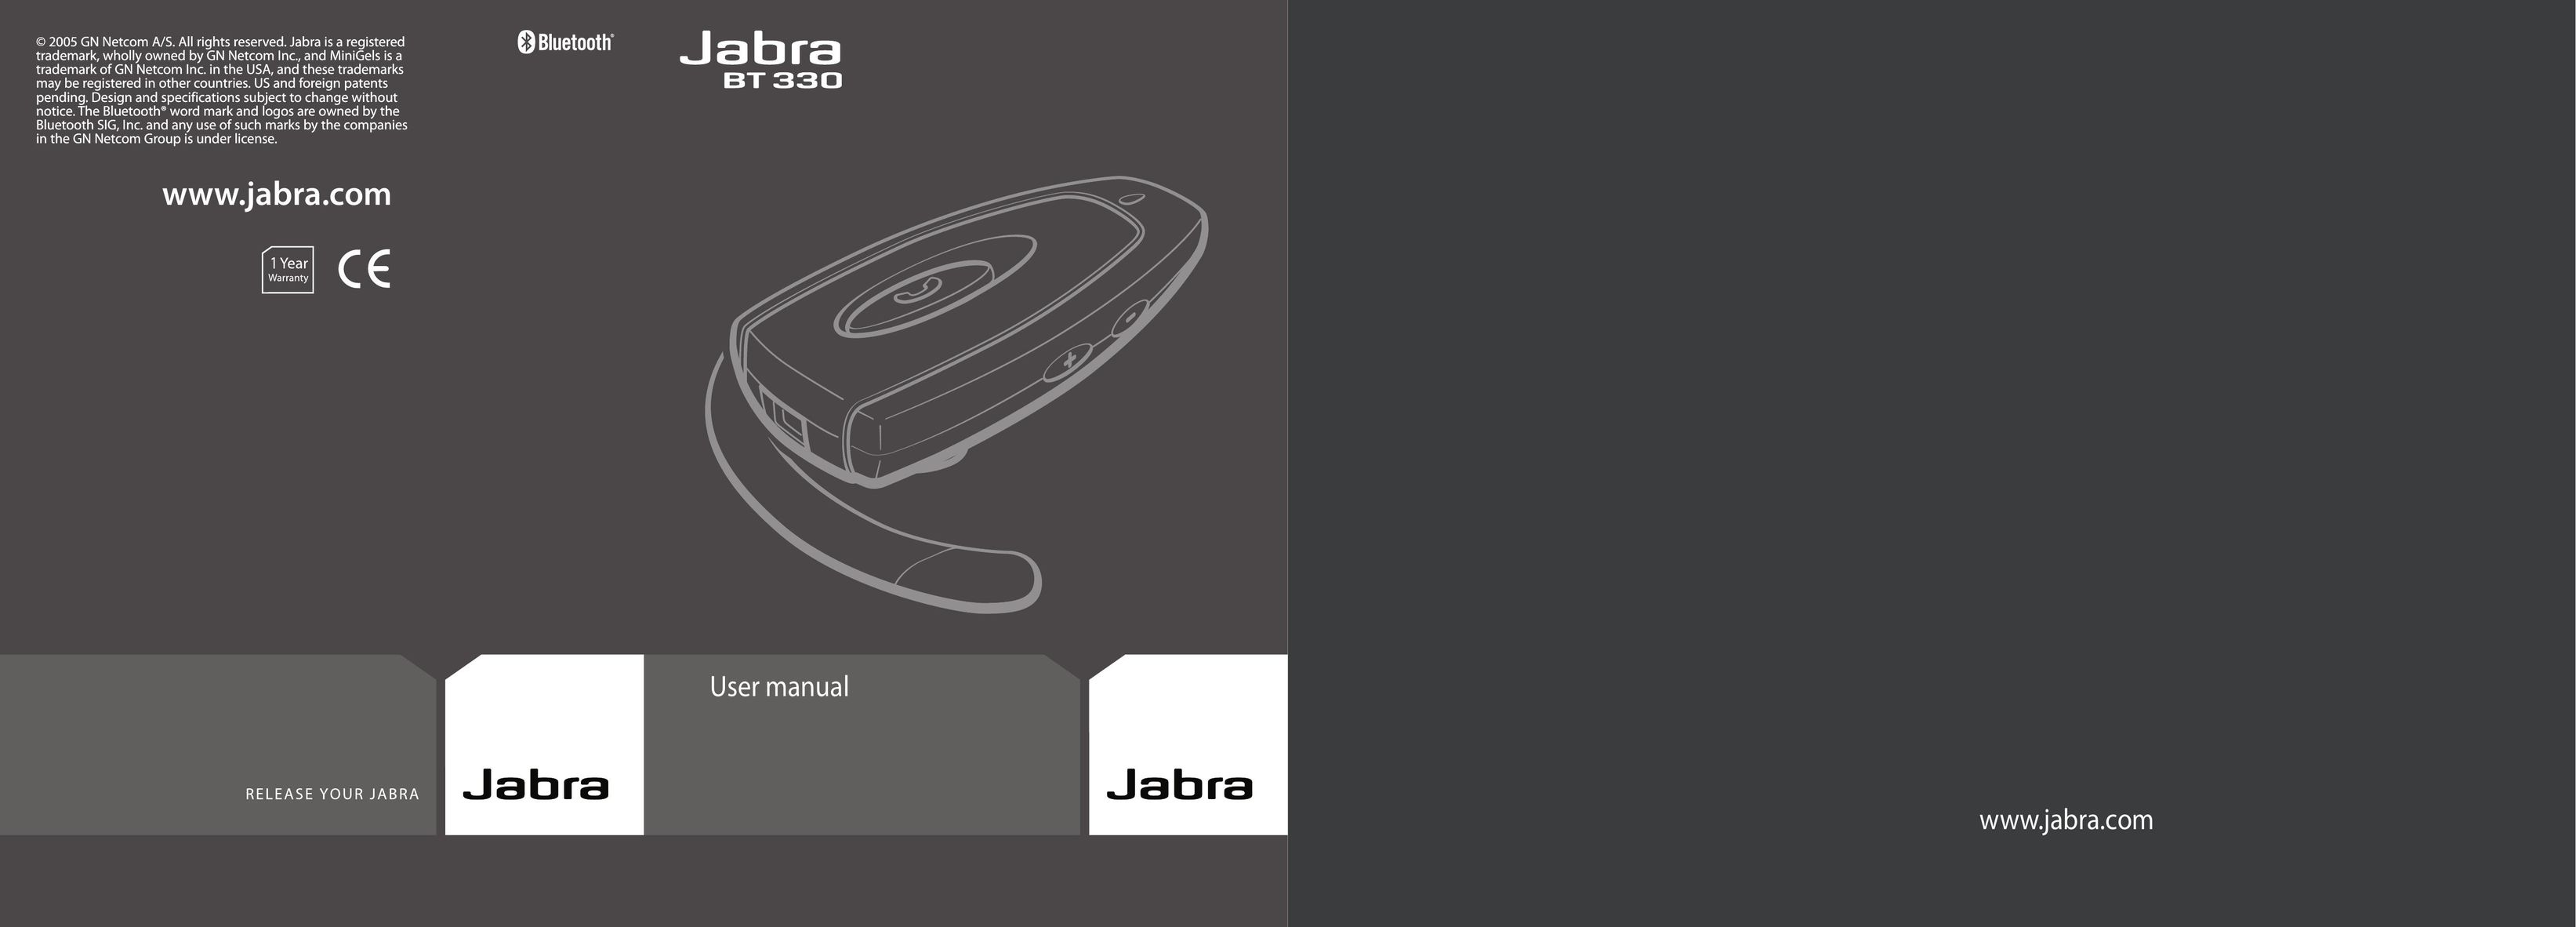 Jabra BT330 Headphones User Manual